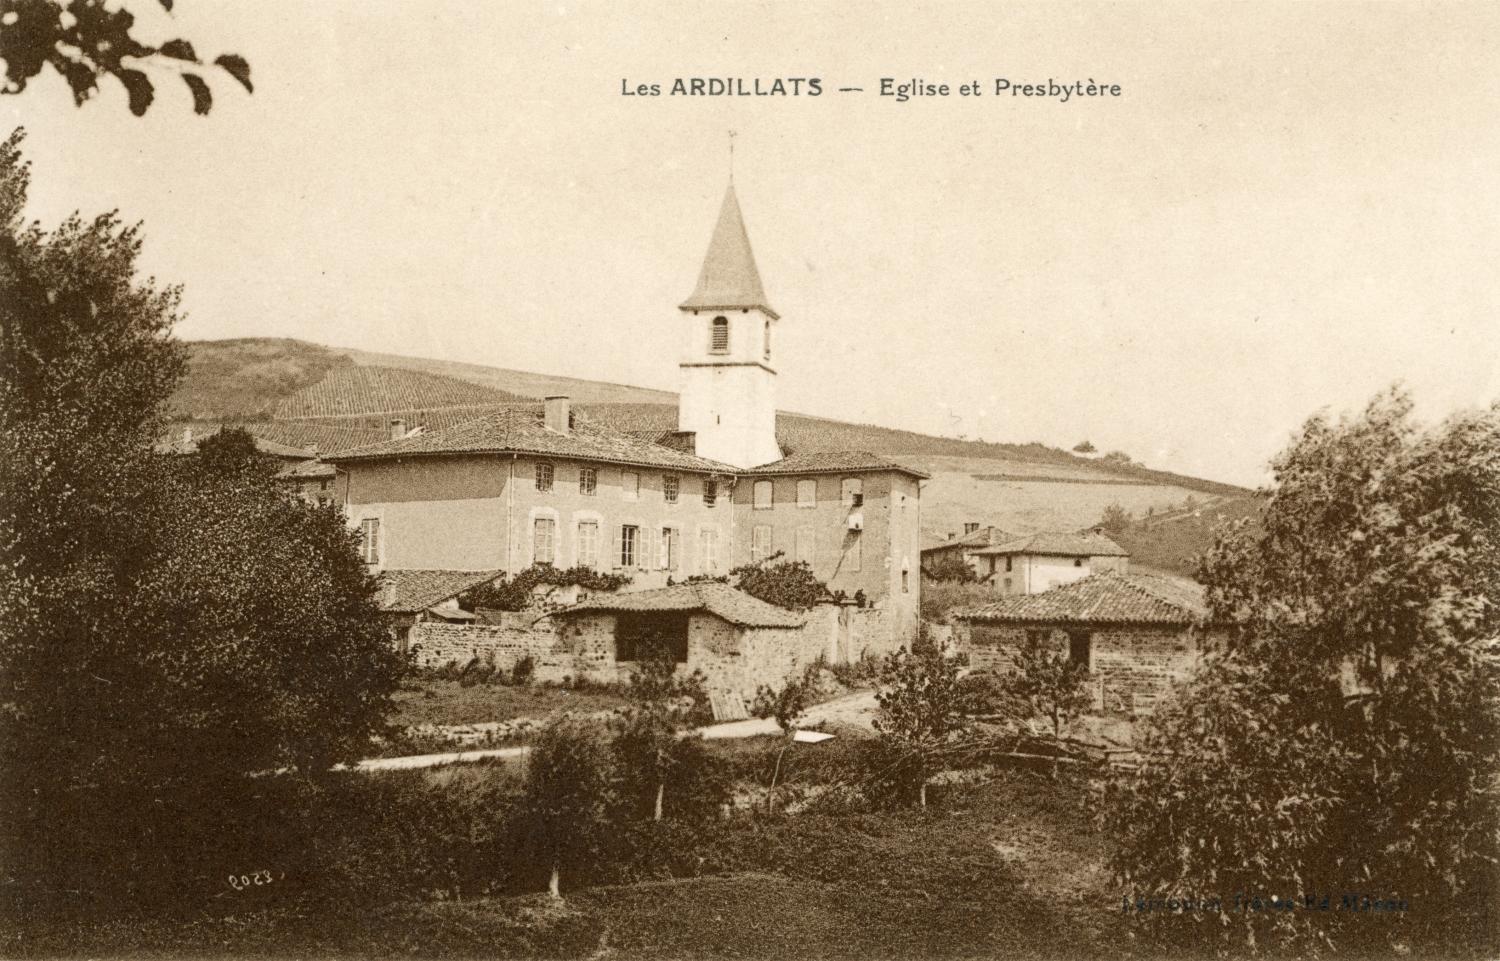 Les Ardillats (Rhône). - Eglise et presbytère